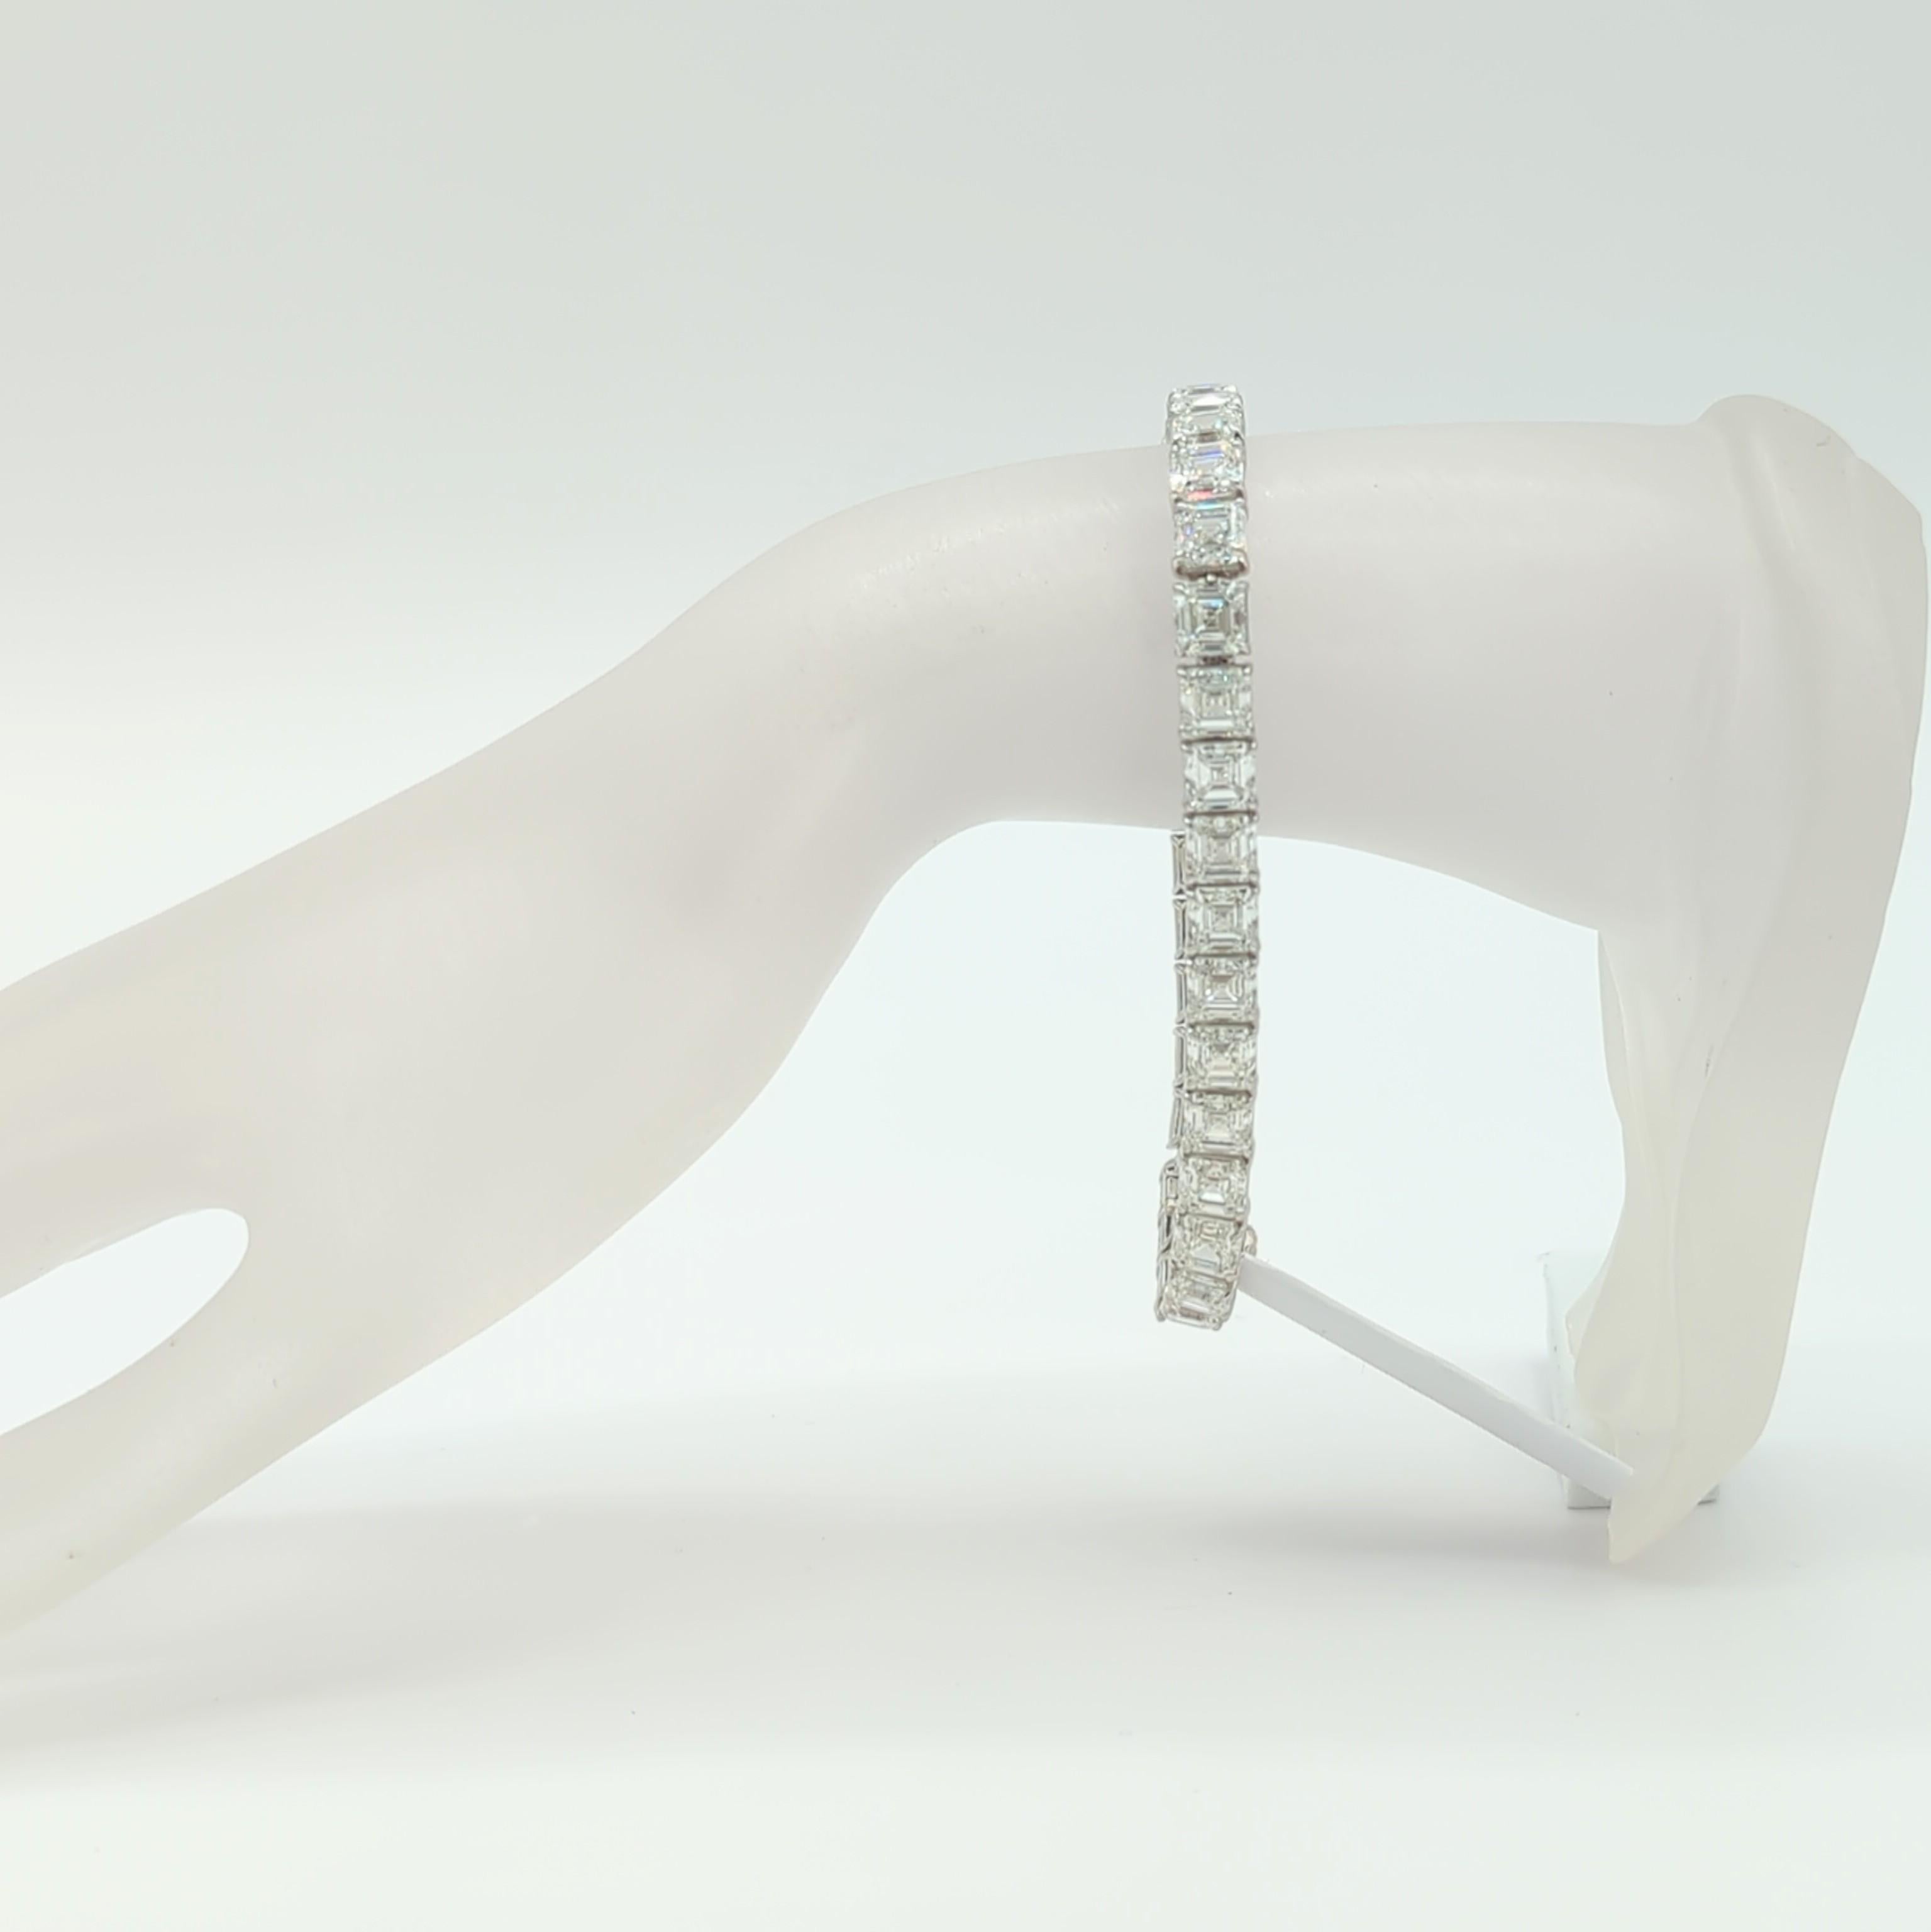 Taille Asscher Bracelet tennis en or blanc 18 carats avec diamants blancs taille Asscher de 34,06 carats, certifiés GIA